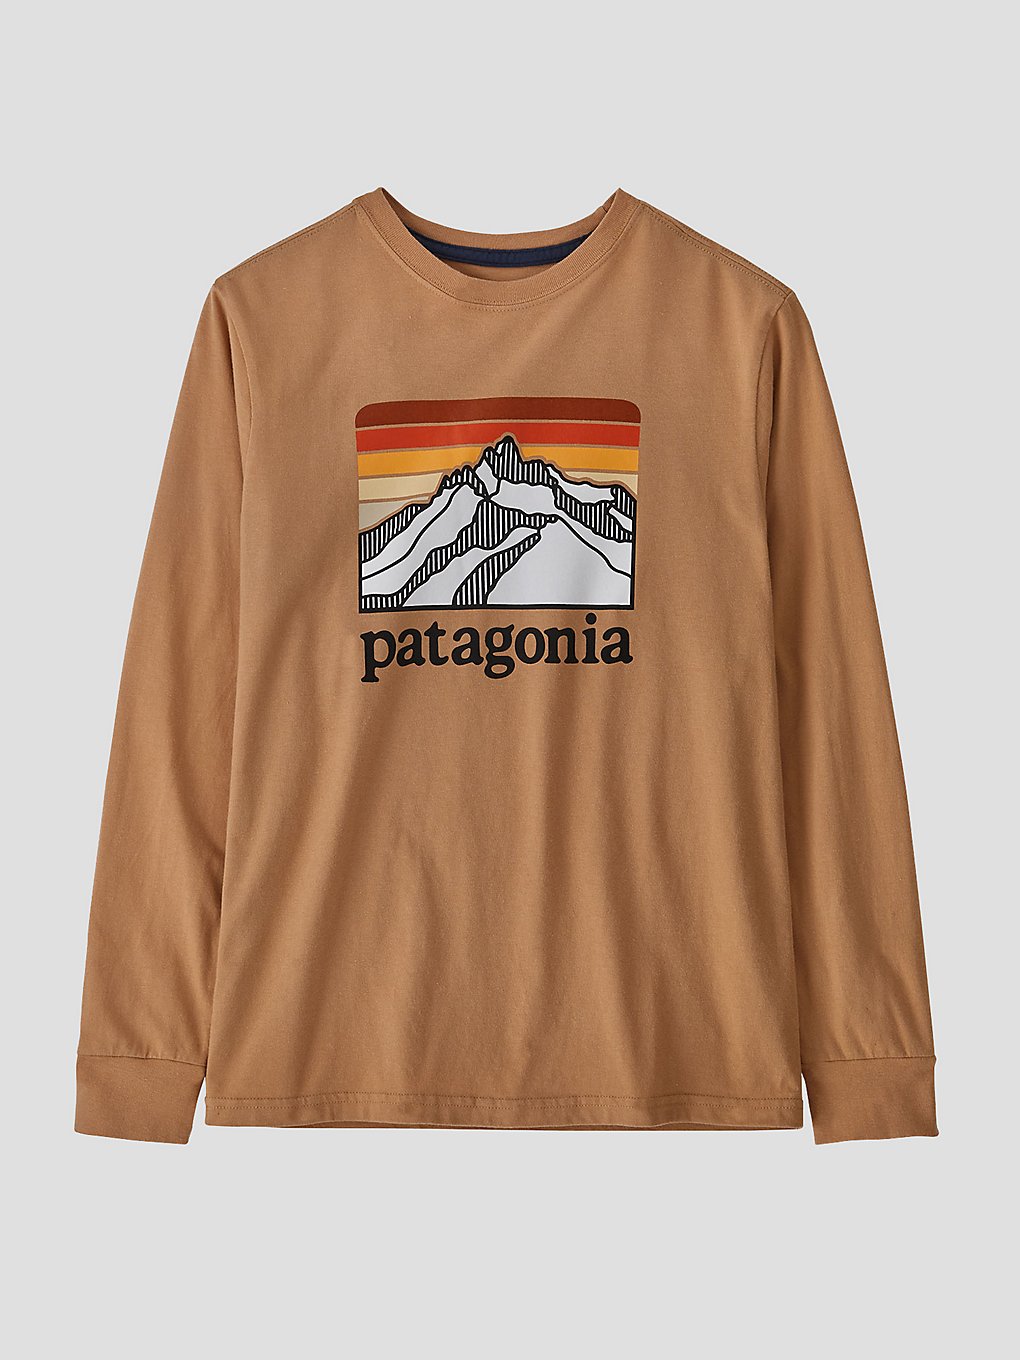 Patagonia Regenerative Organic Certified Cotton Gr Longsleeve T-Shirt bruin